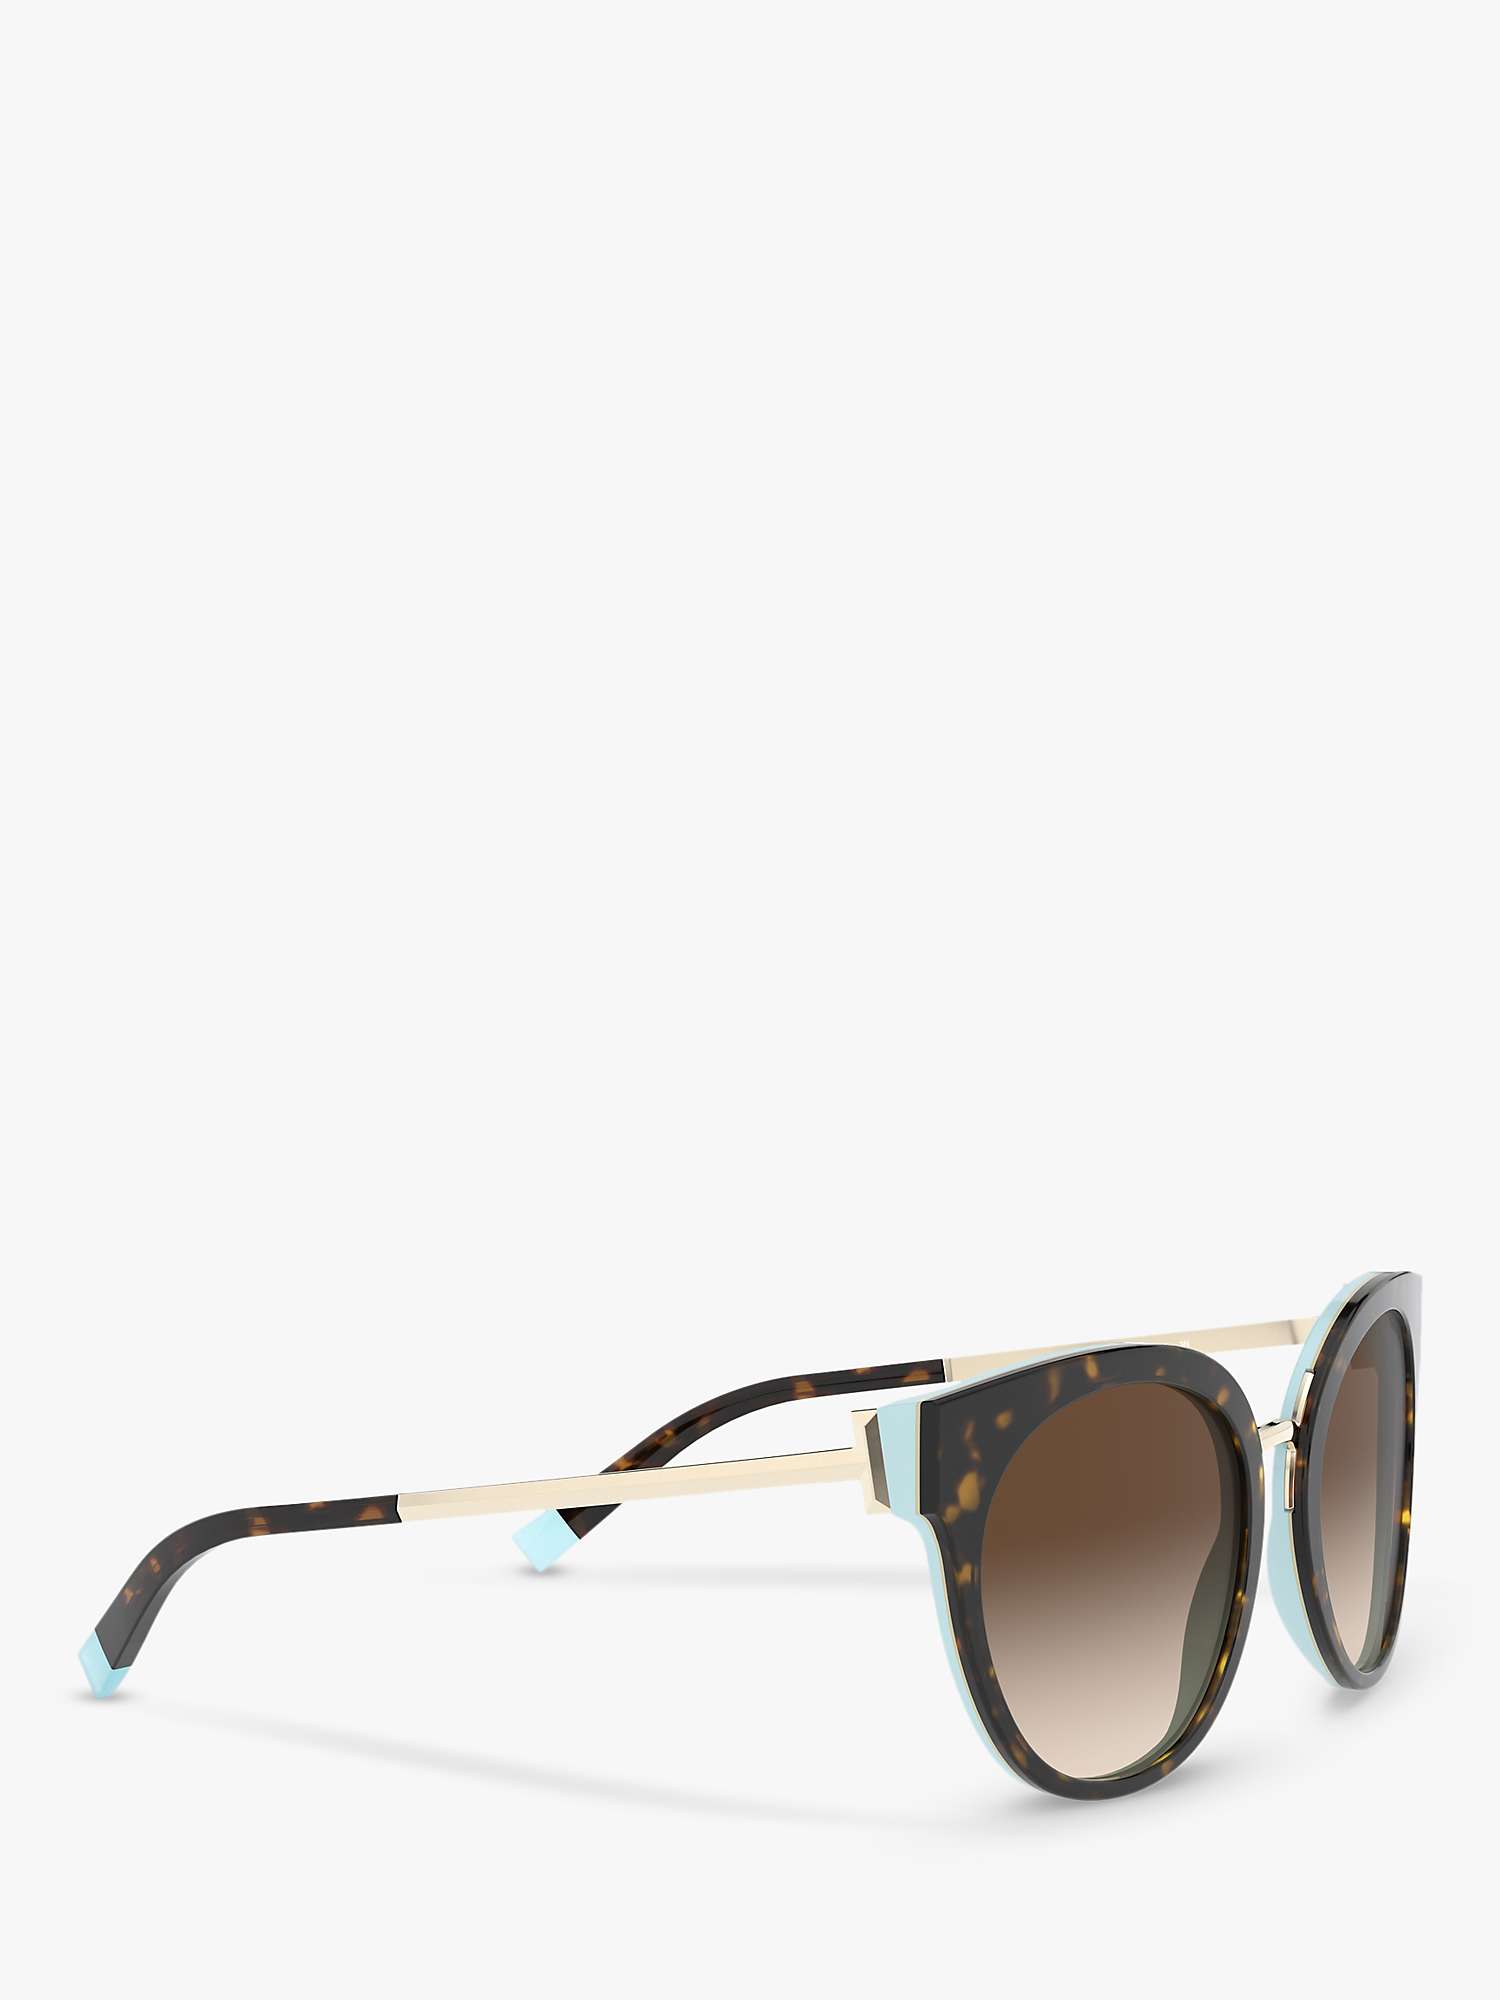 Buy Tiffany & Co TF4168 Women's Round Sunglasses, Havana/Brown Gradient Online at johnlewis.com